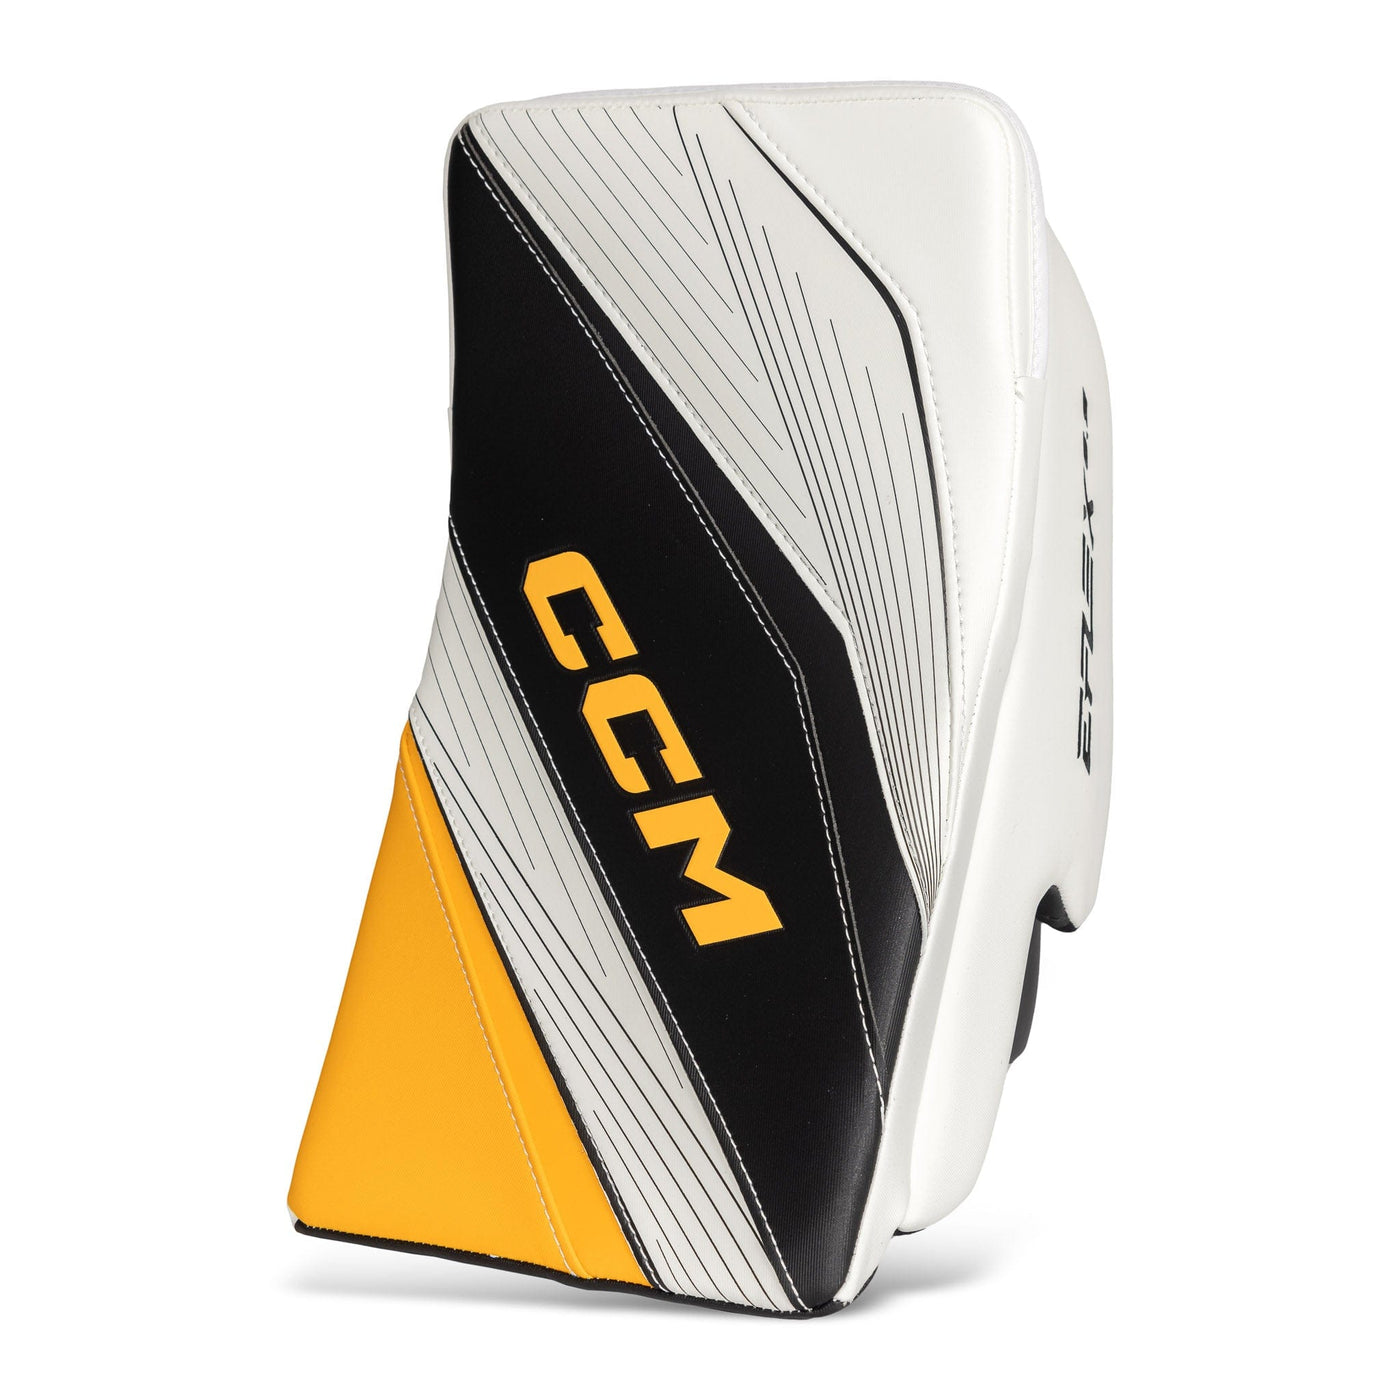 CCM Extreme Flex E6.9 Senior Goalie Blocker - The Hockey Shop Source For Sports